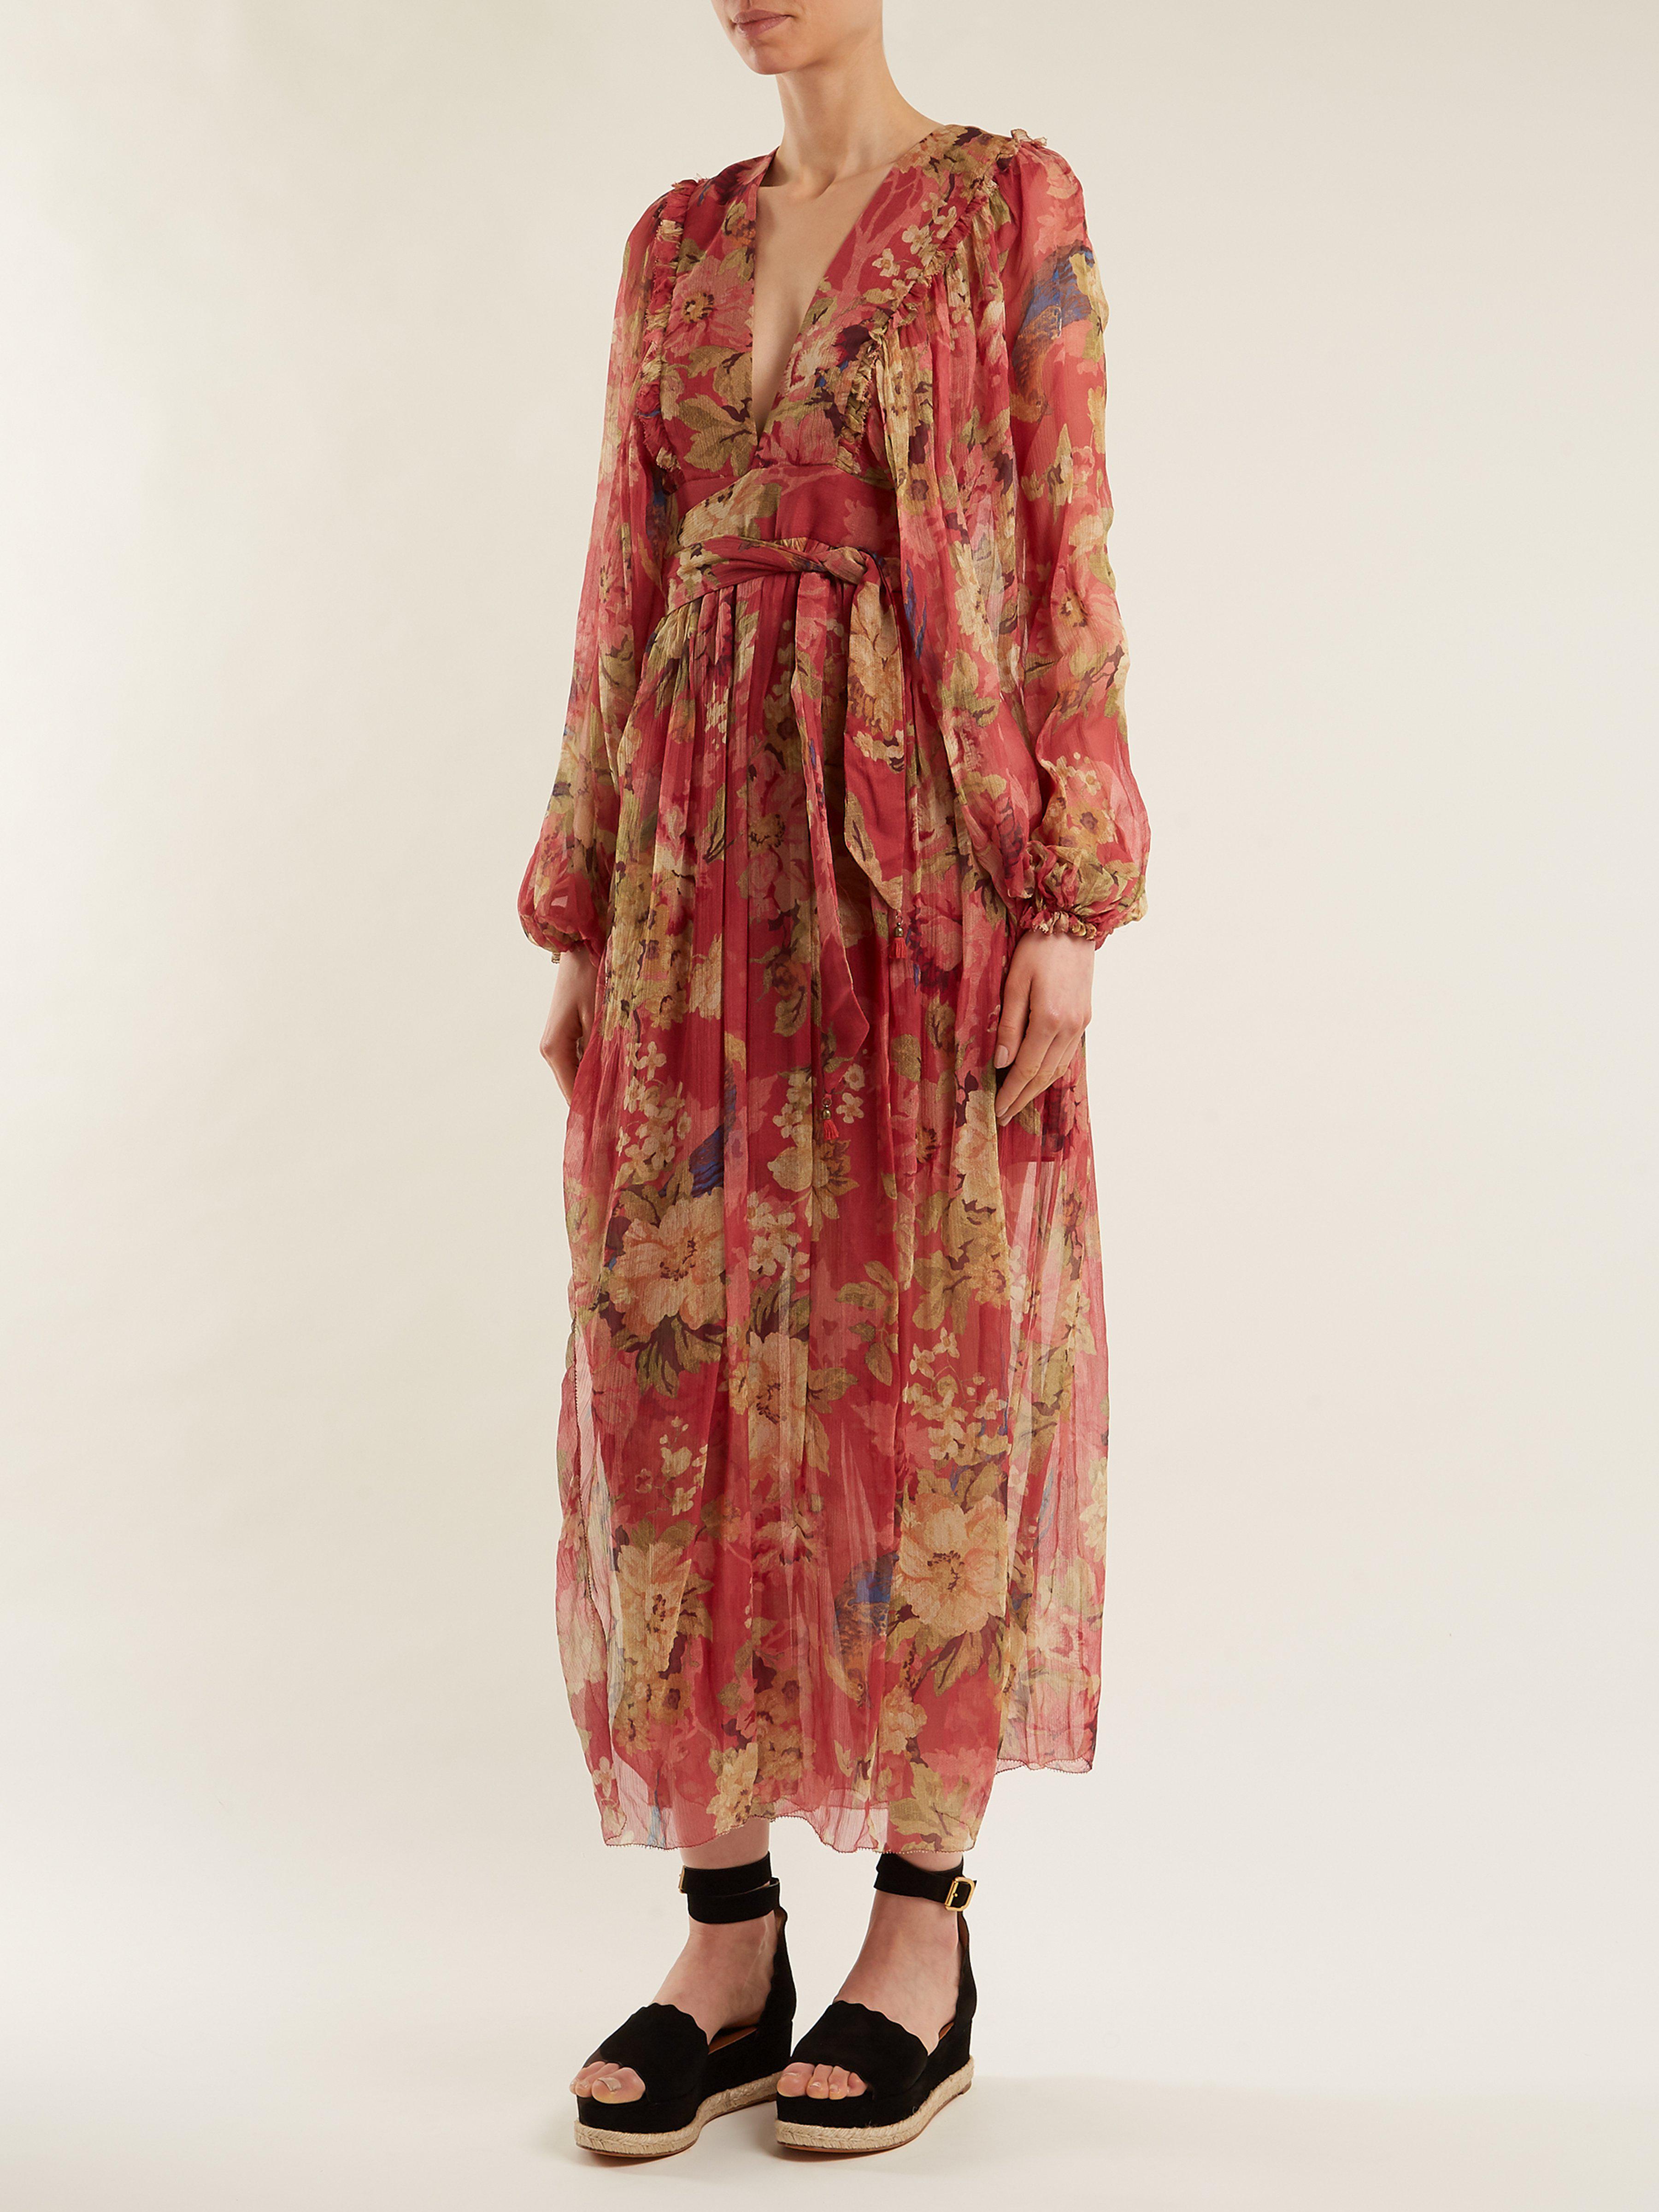 Zimmermann Melody Wrap Floral Print Silk Dress in Burgundy (Red) - Lyst